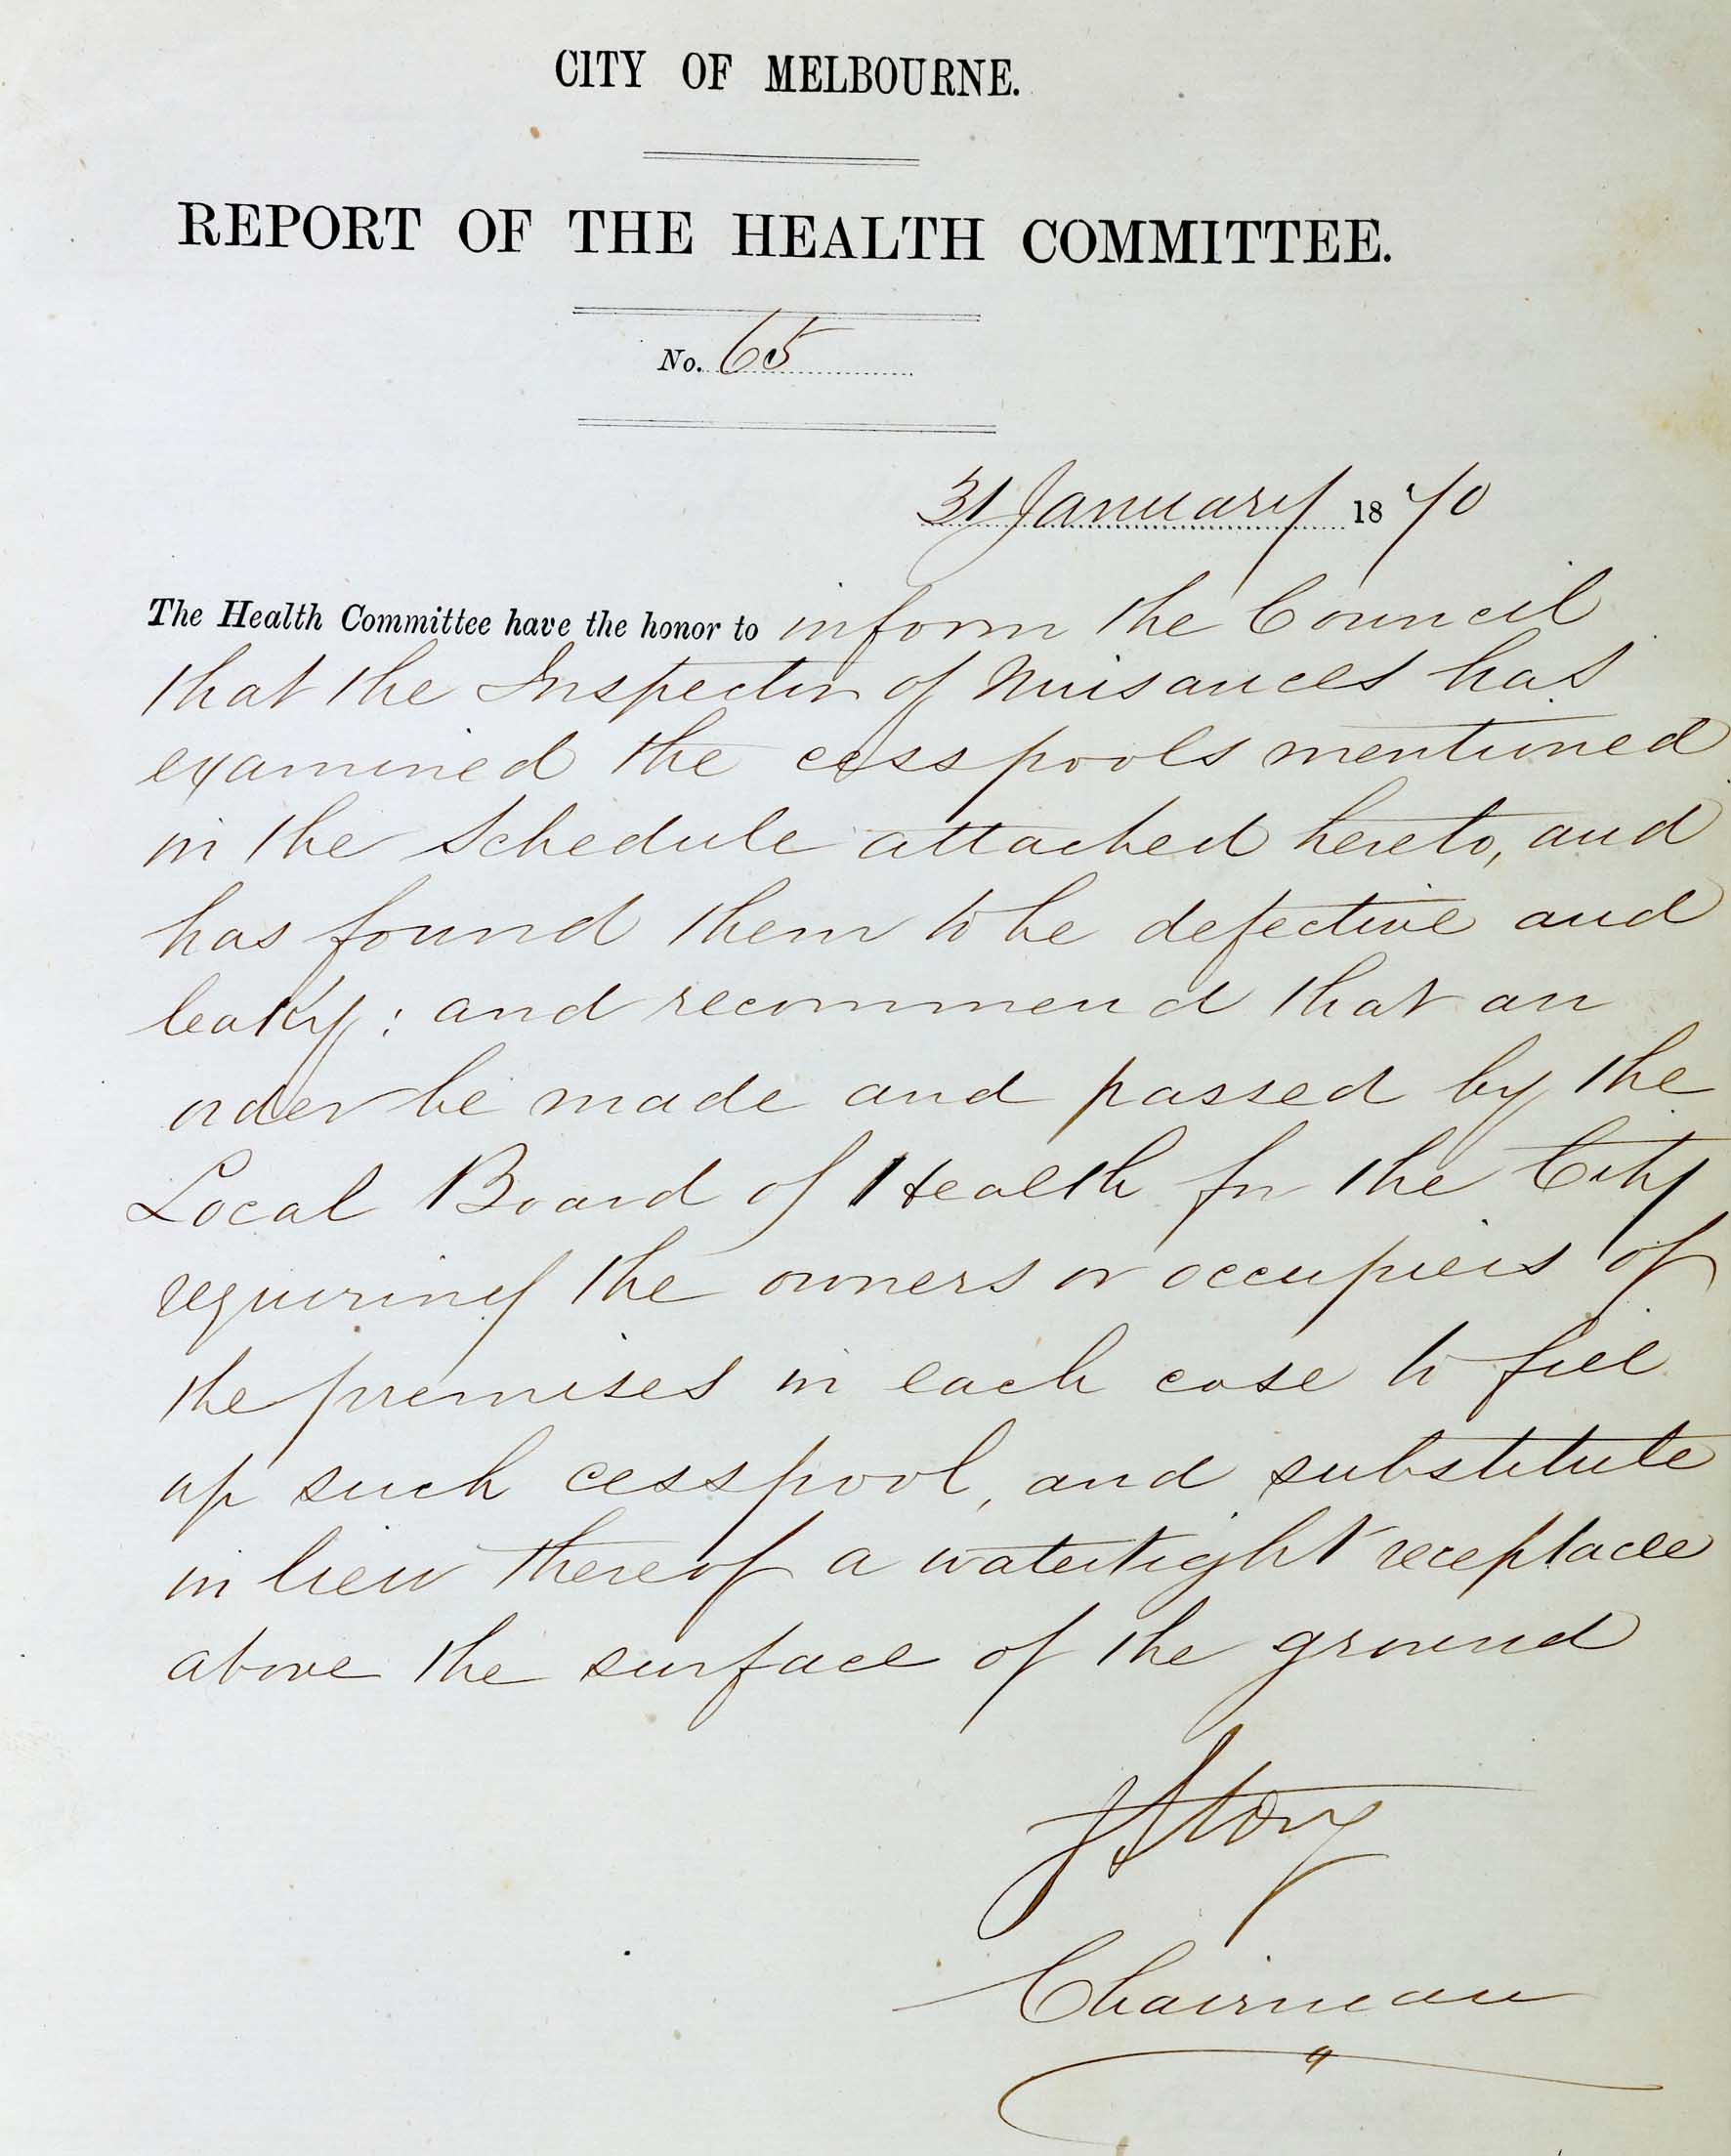 Health Committee Report, 1870